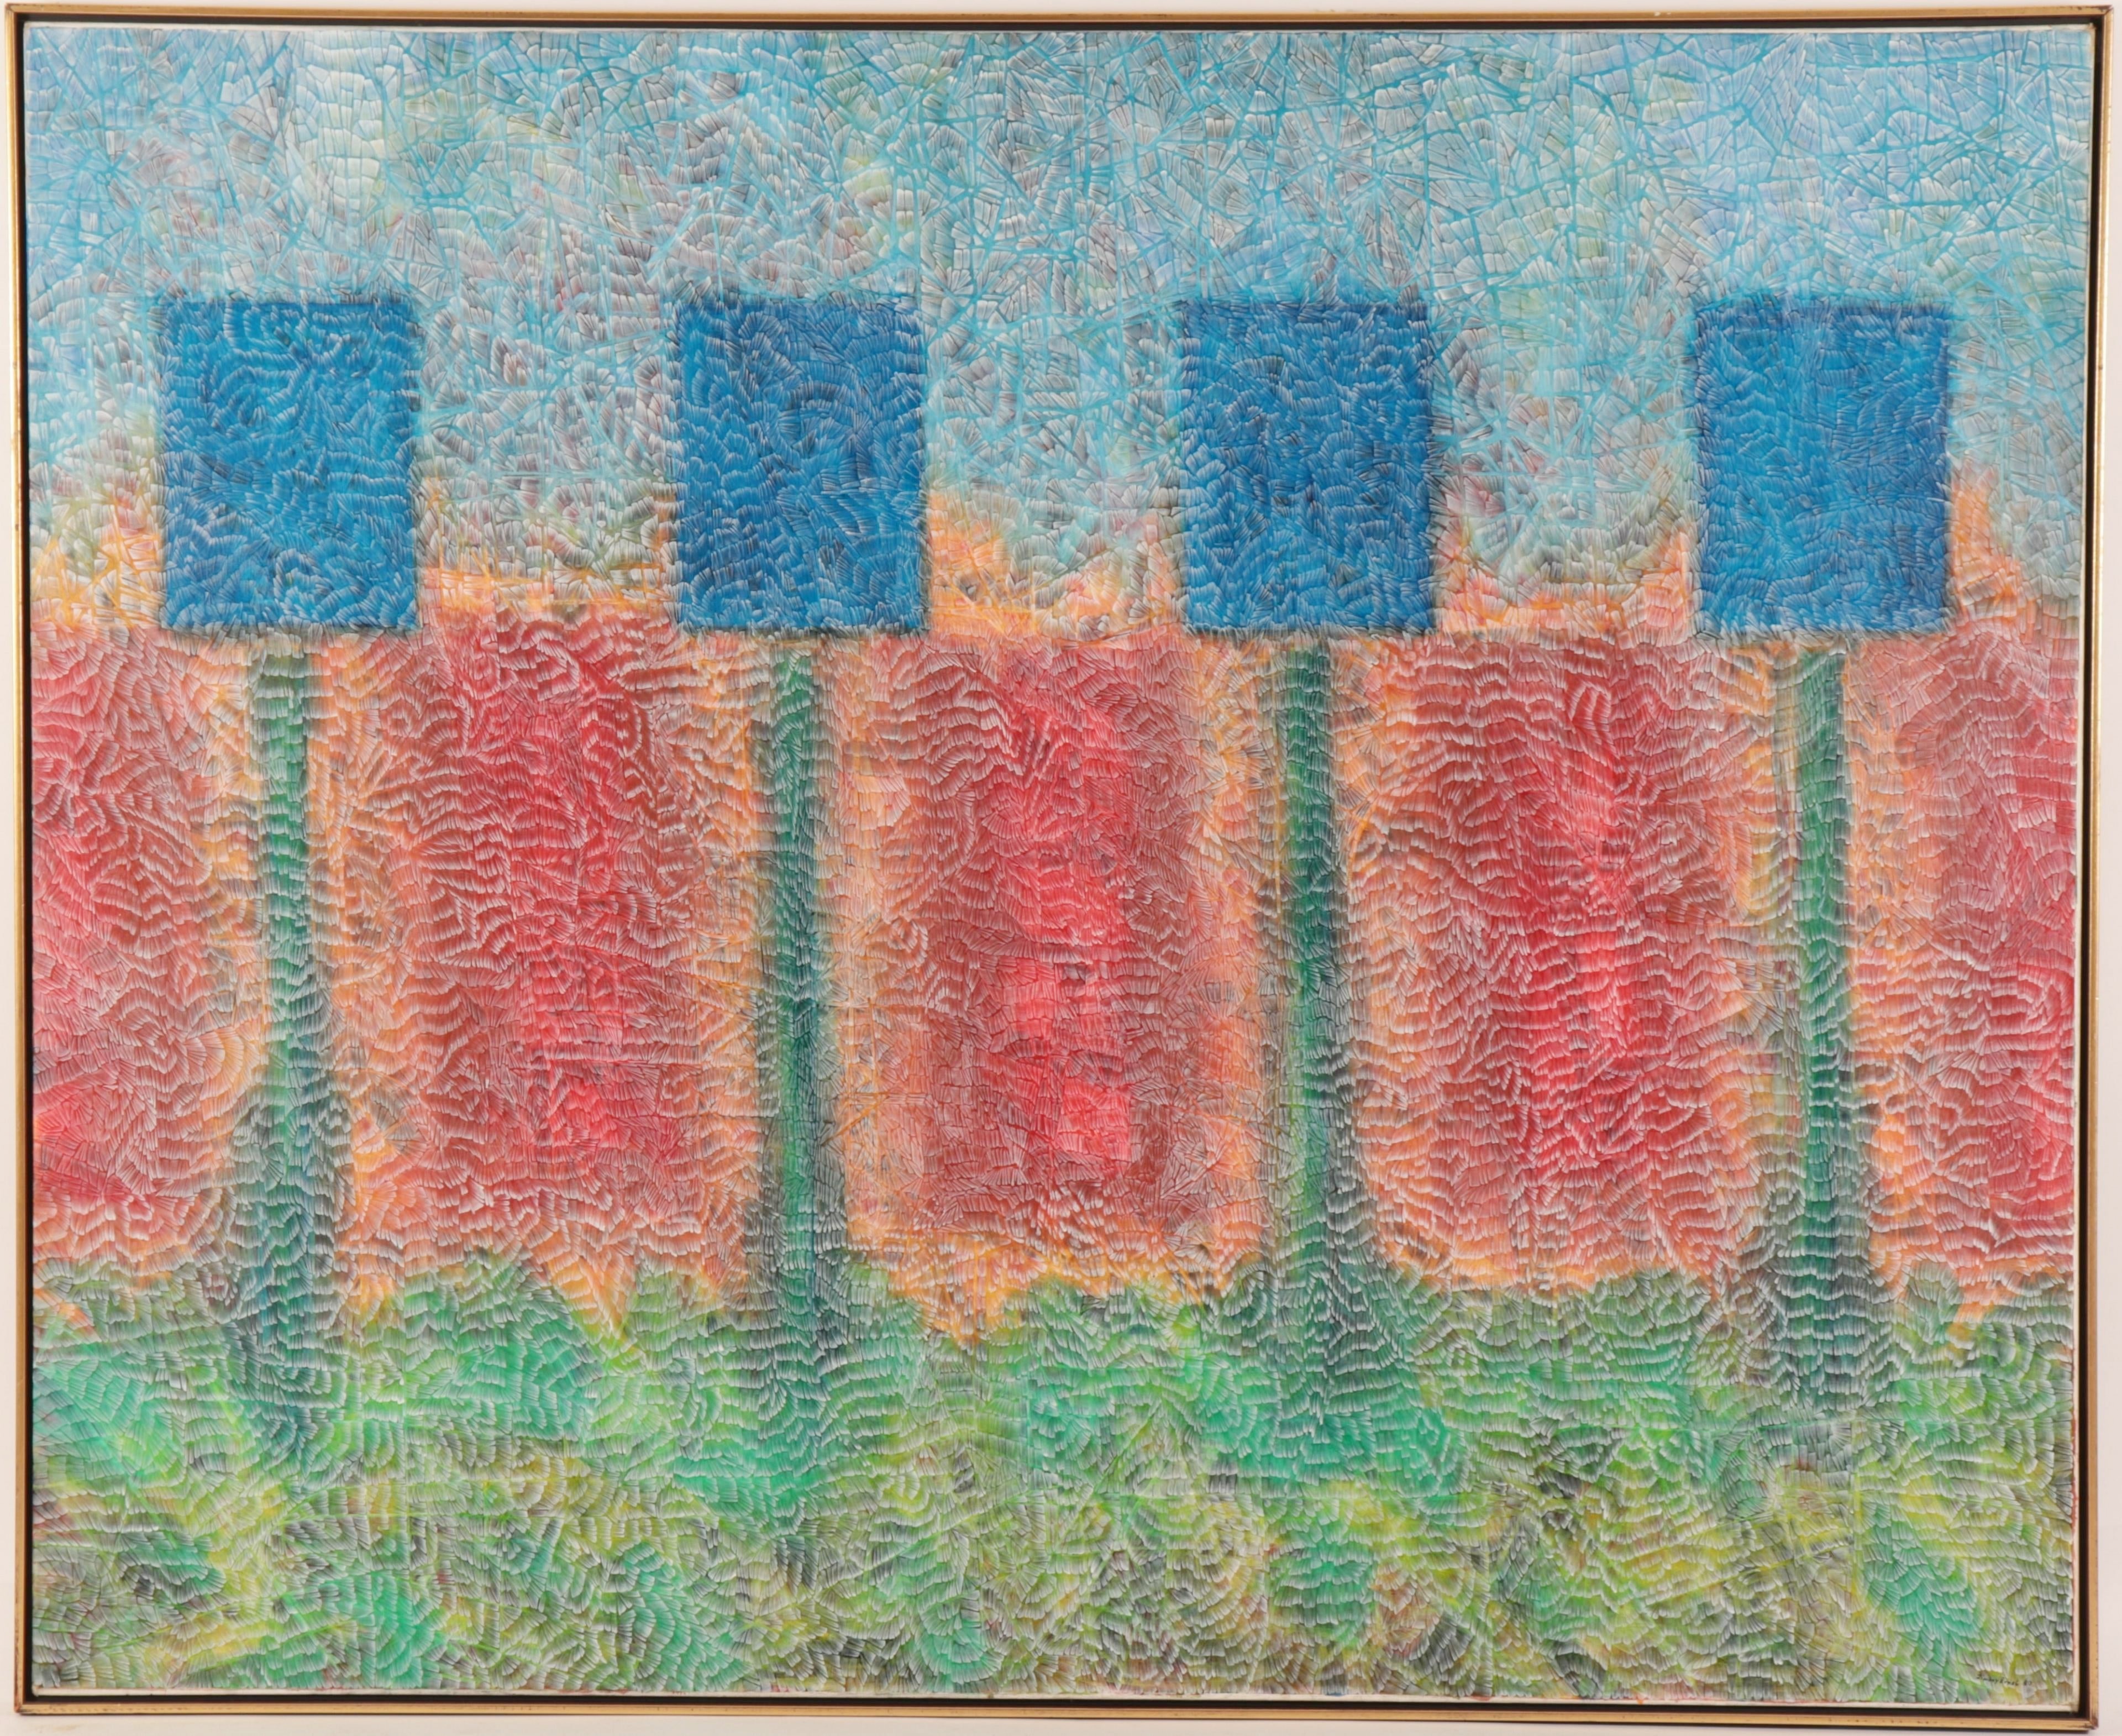 Jimmy Ernst, Dusklight, 1980, Oil On Canvas. Sold For $13,650